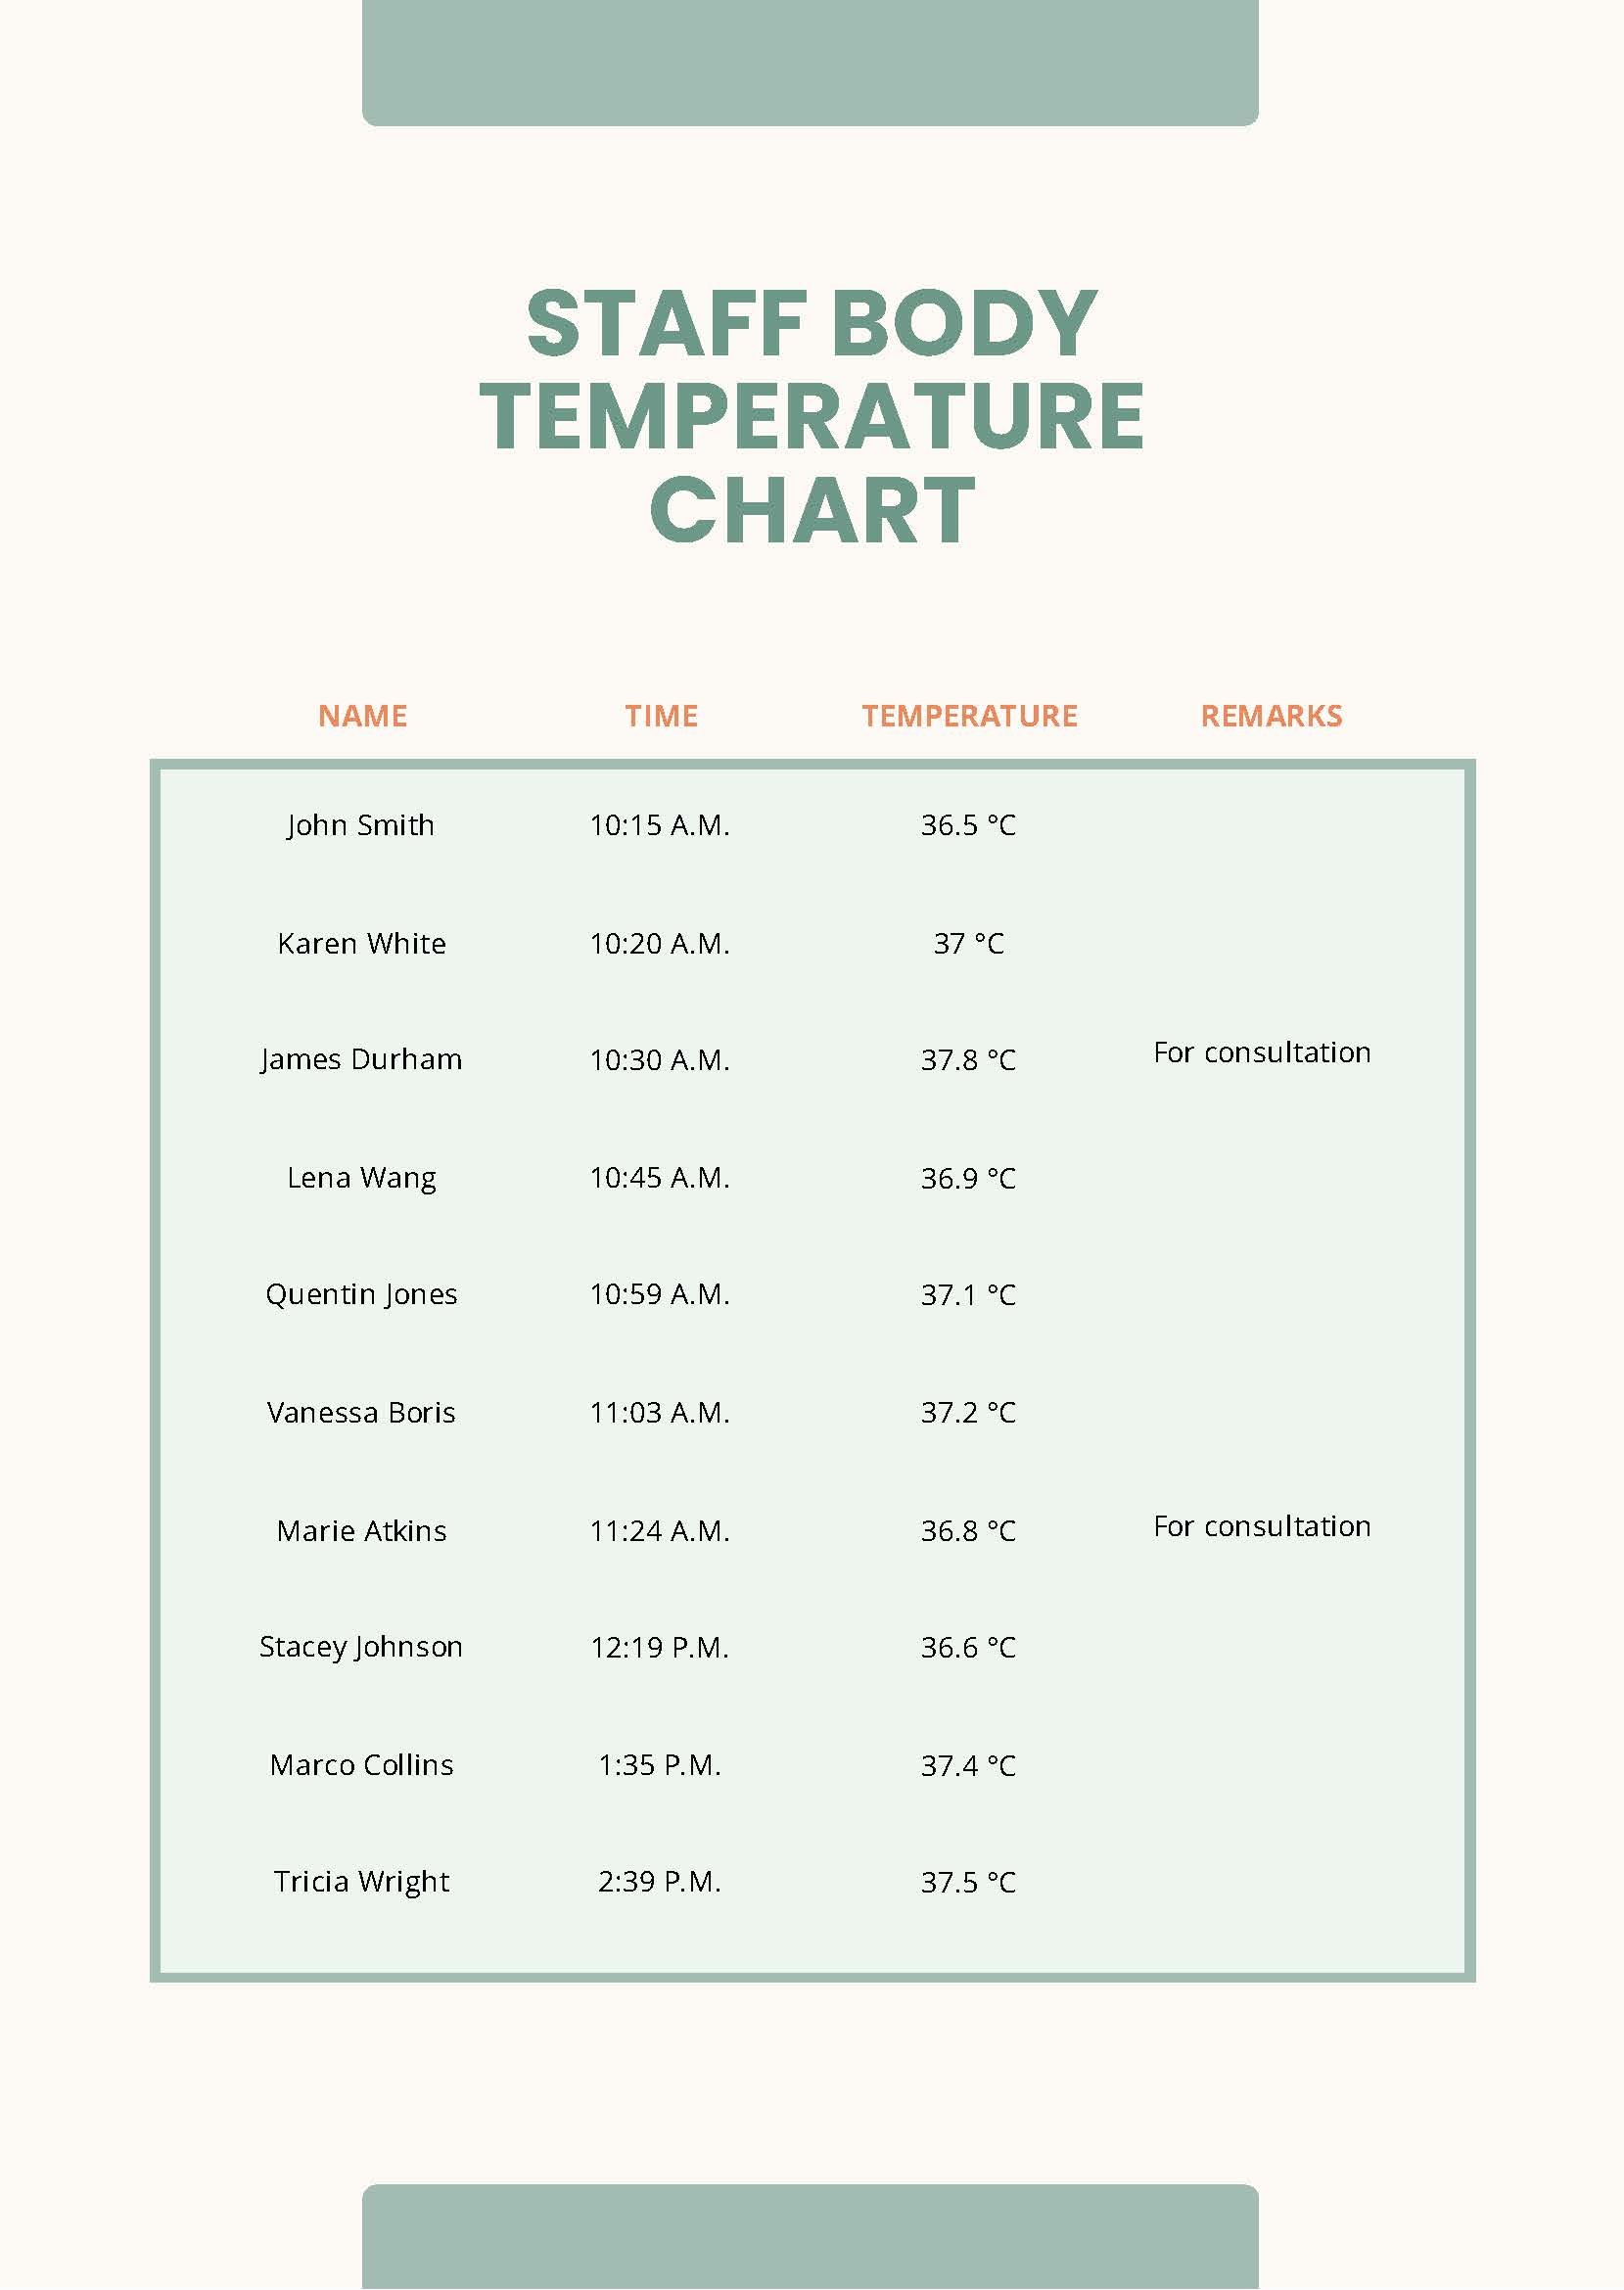 Staff Body Temperature Chart in PDF